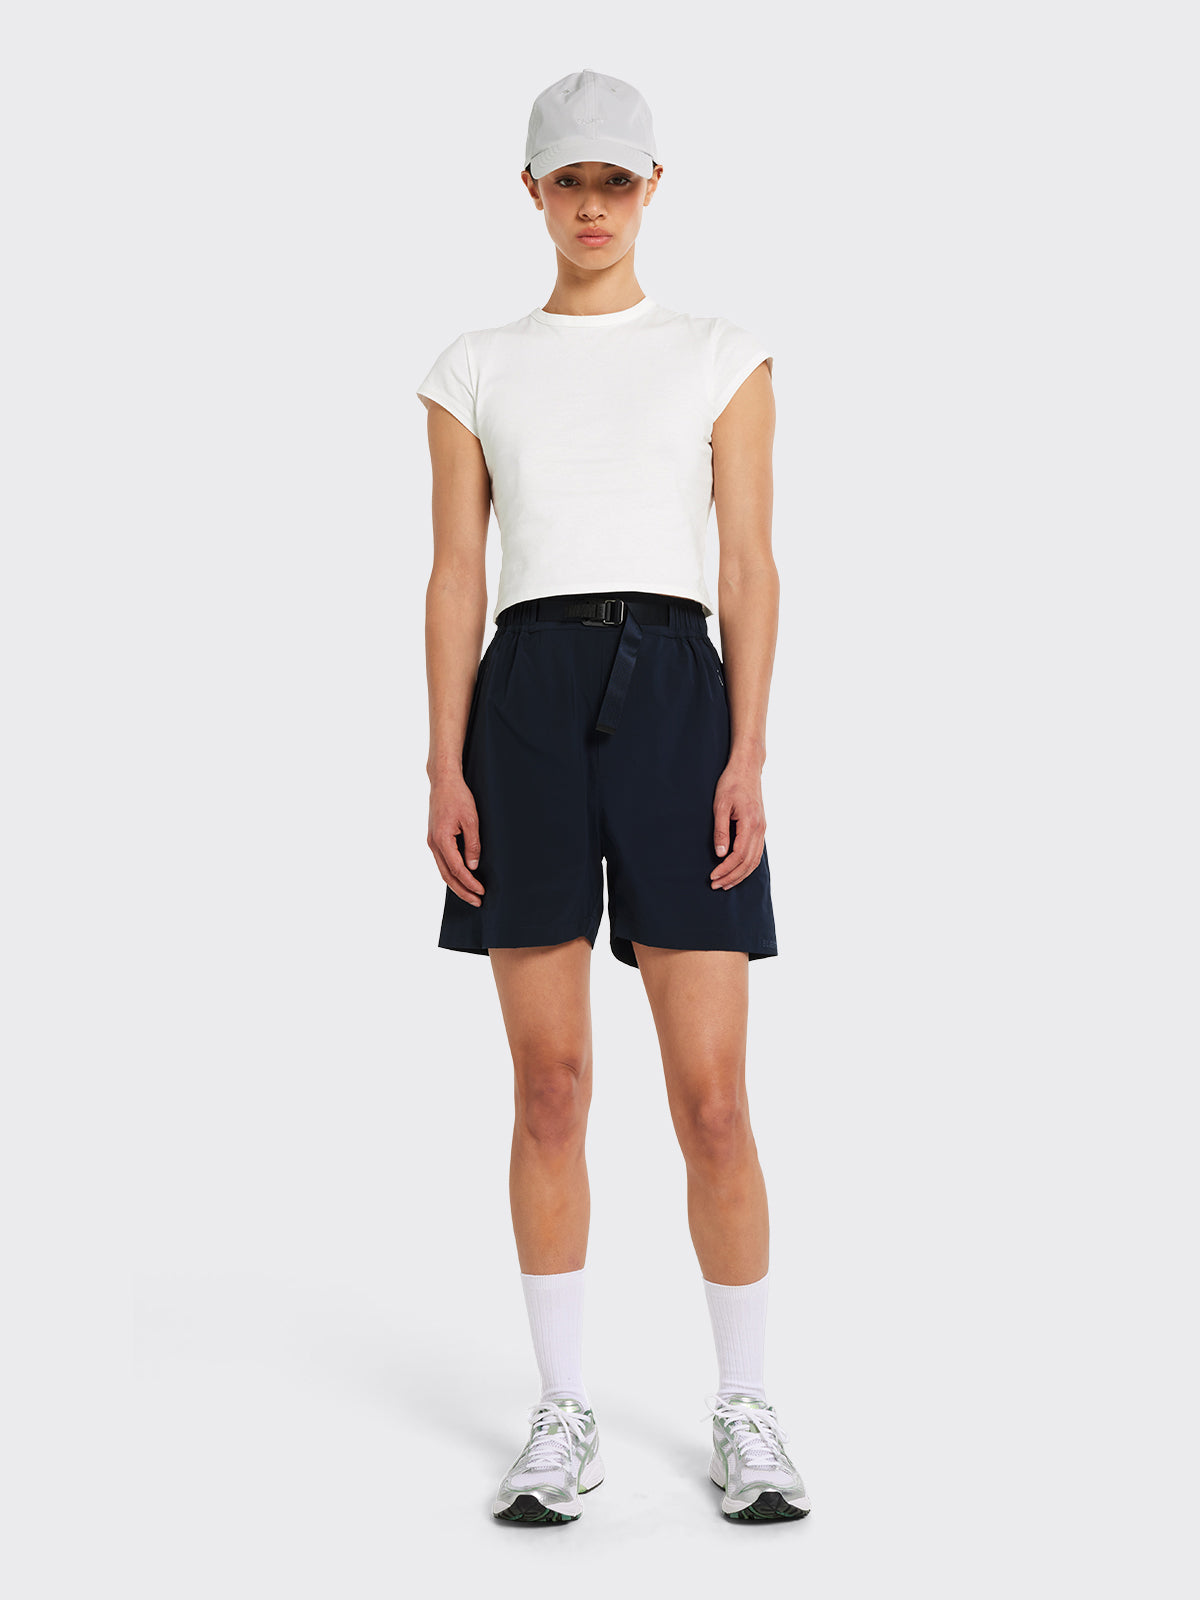 Hjelle lightweight shorts